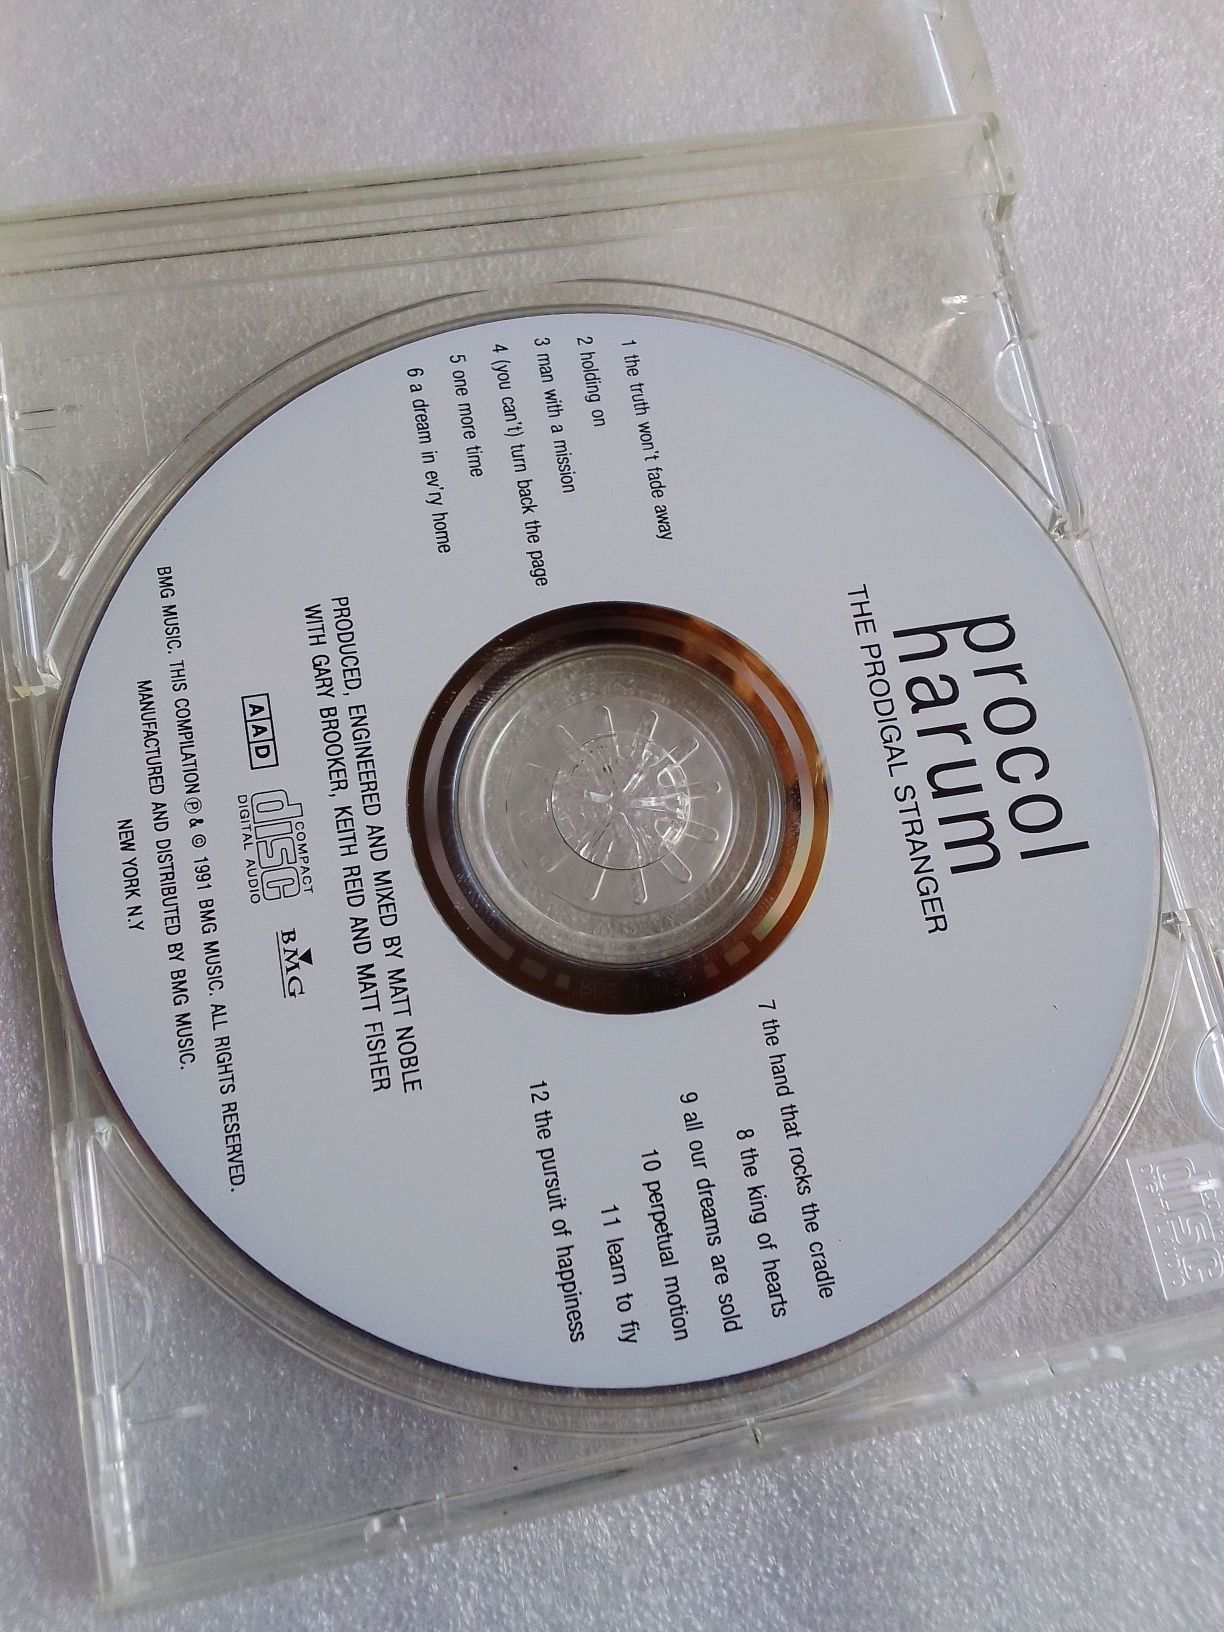 PROCOL HARUM "The Prodigal Stranger". CD Audio.